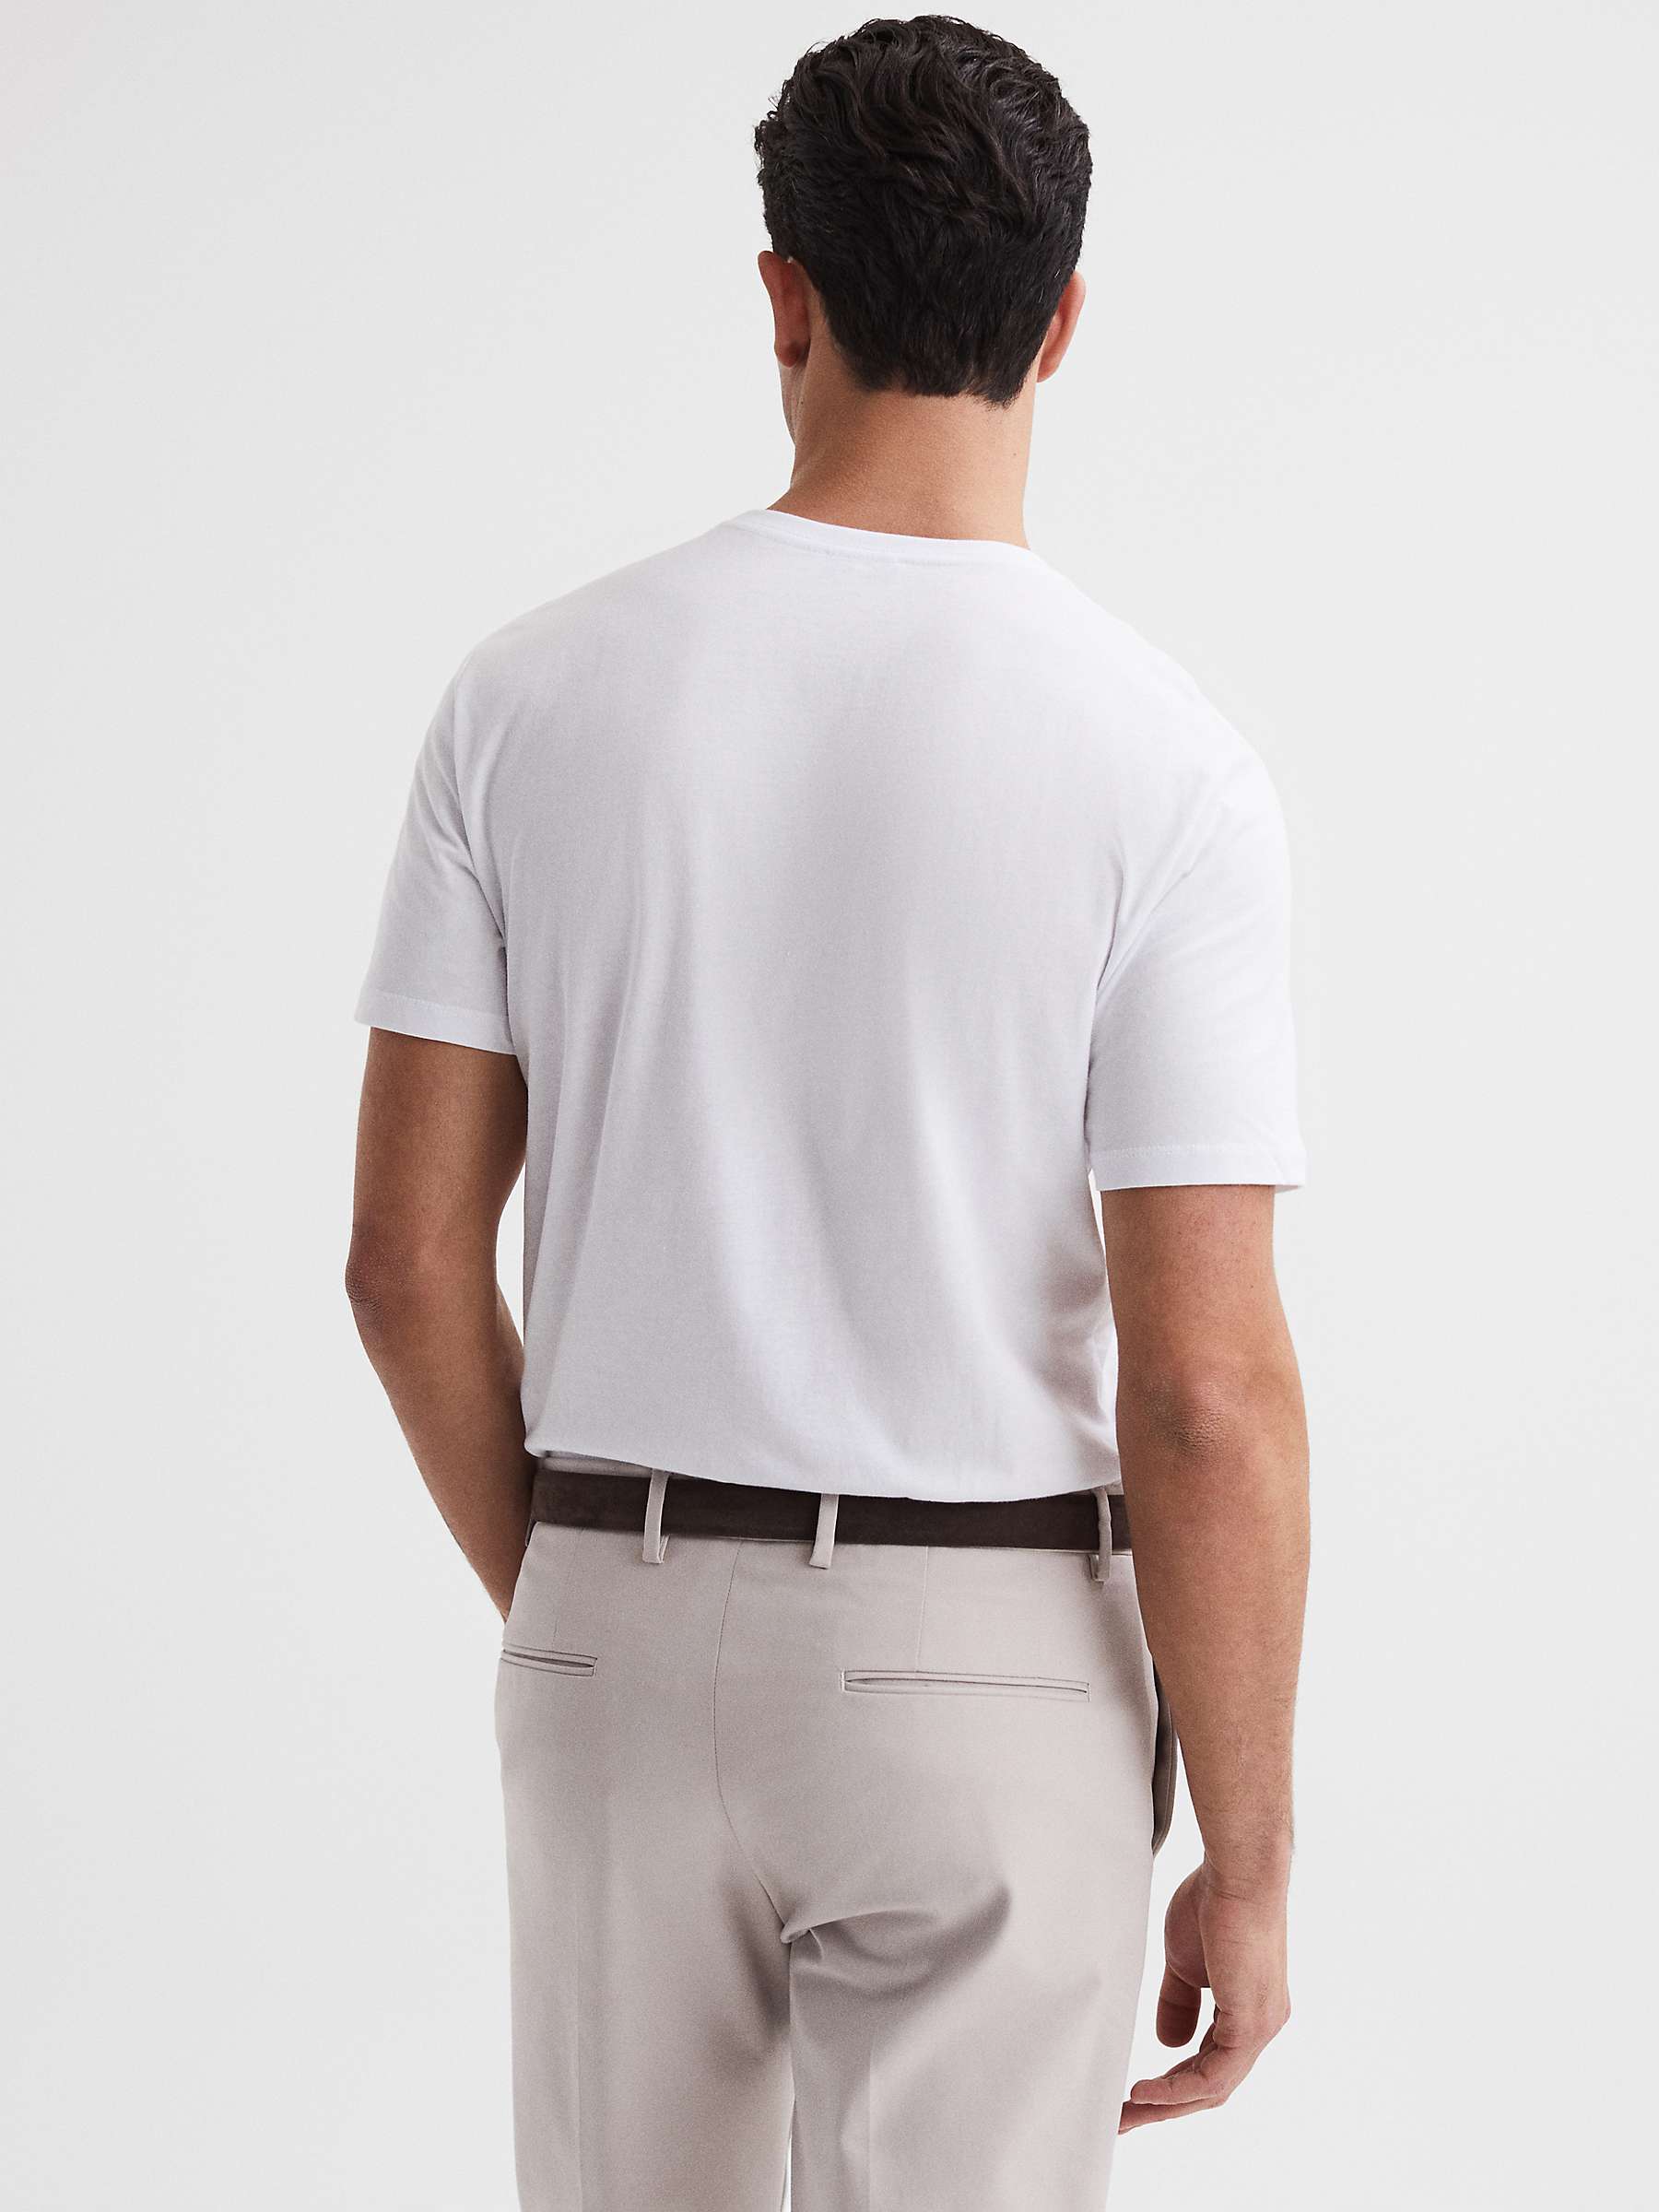 Buy Reiss Bless T-Shirt, Pack of 3, White Online at johnlewis.com